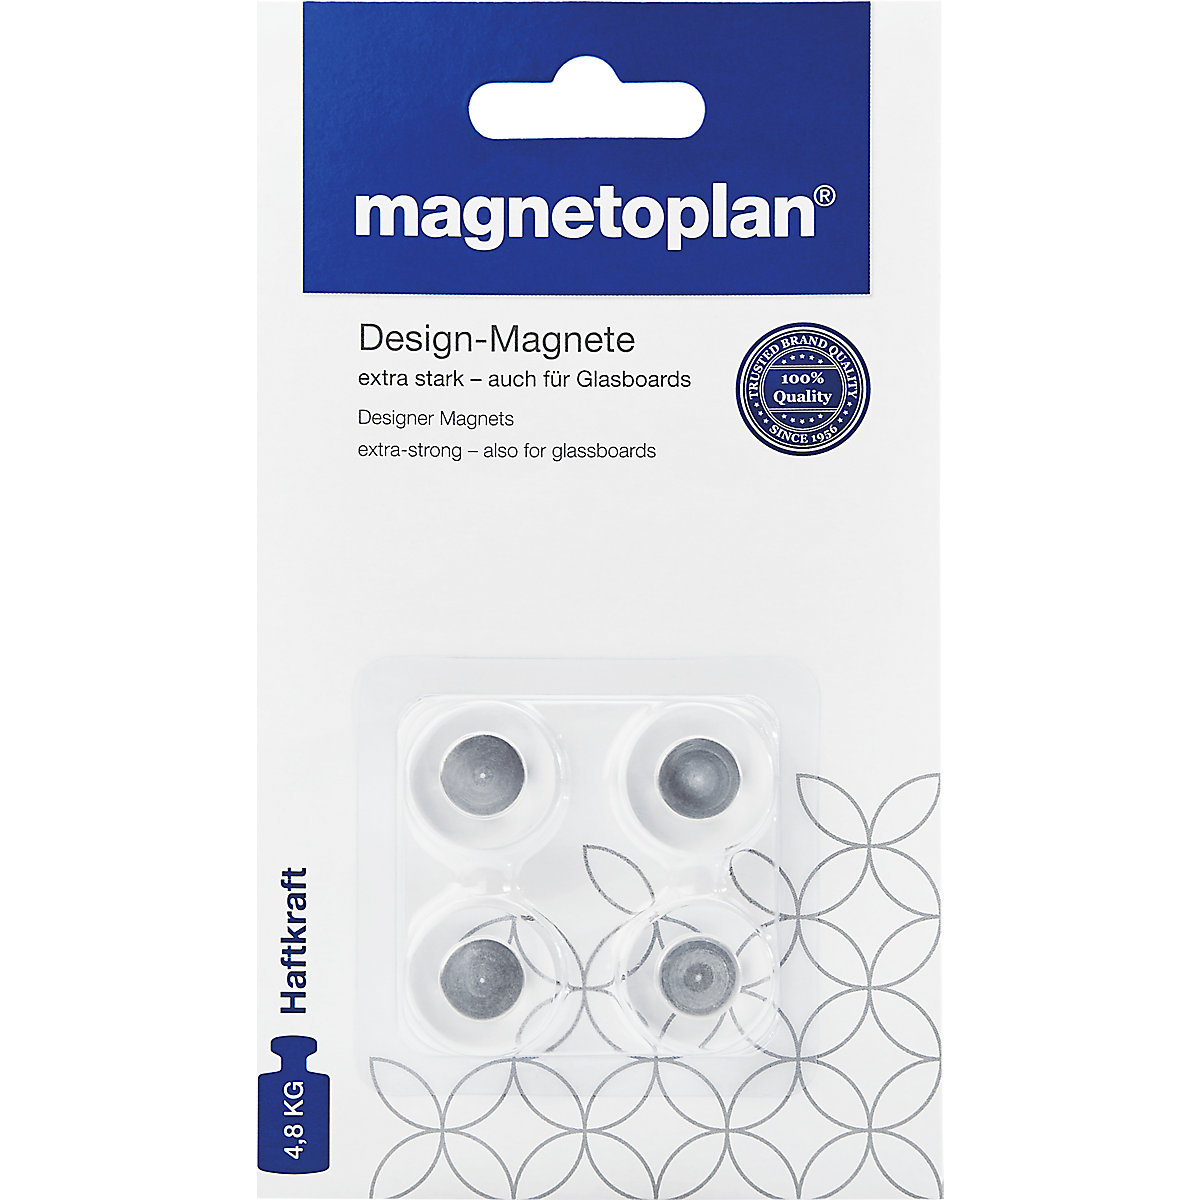 Plot magnétique design - magnetoplan